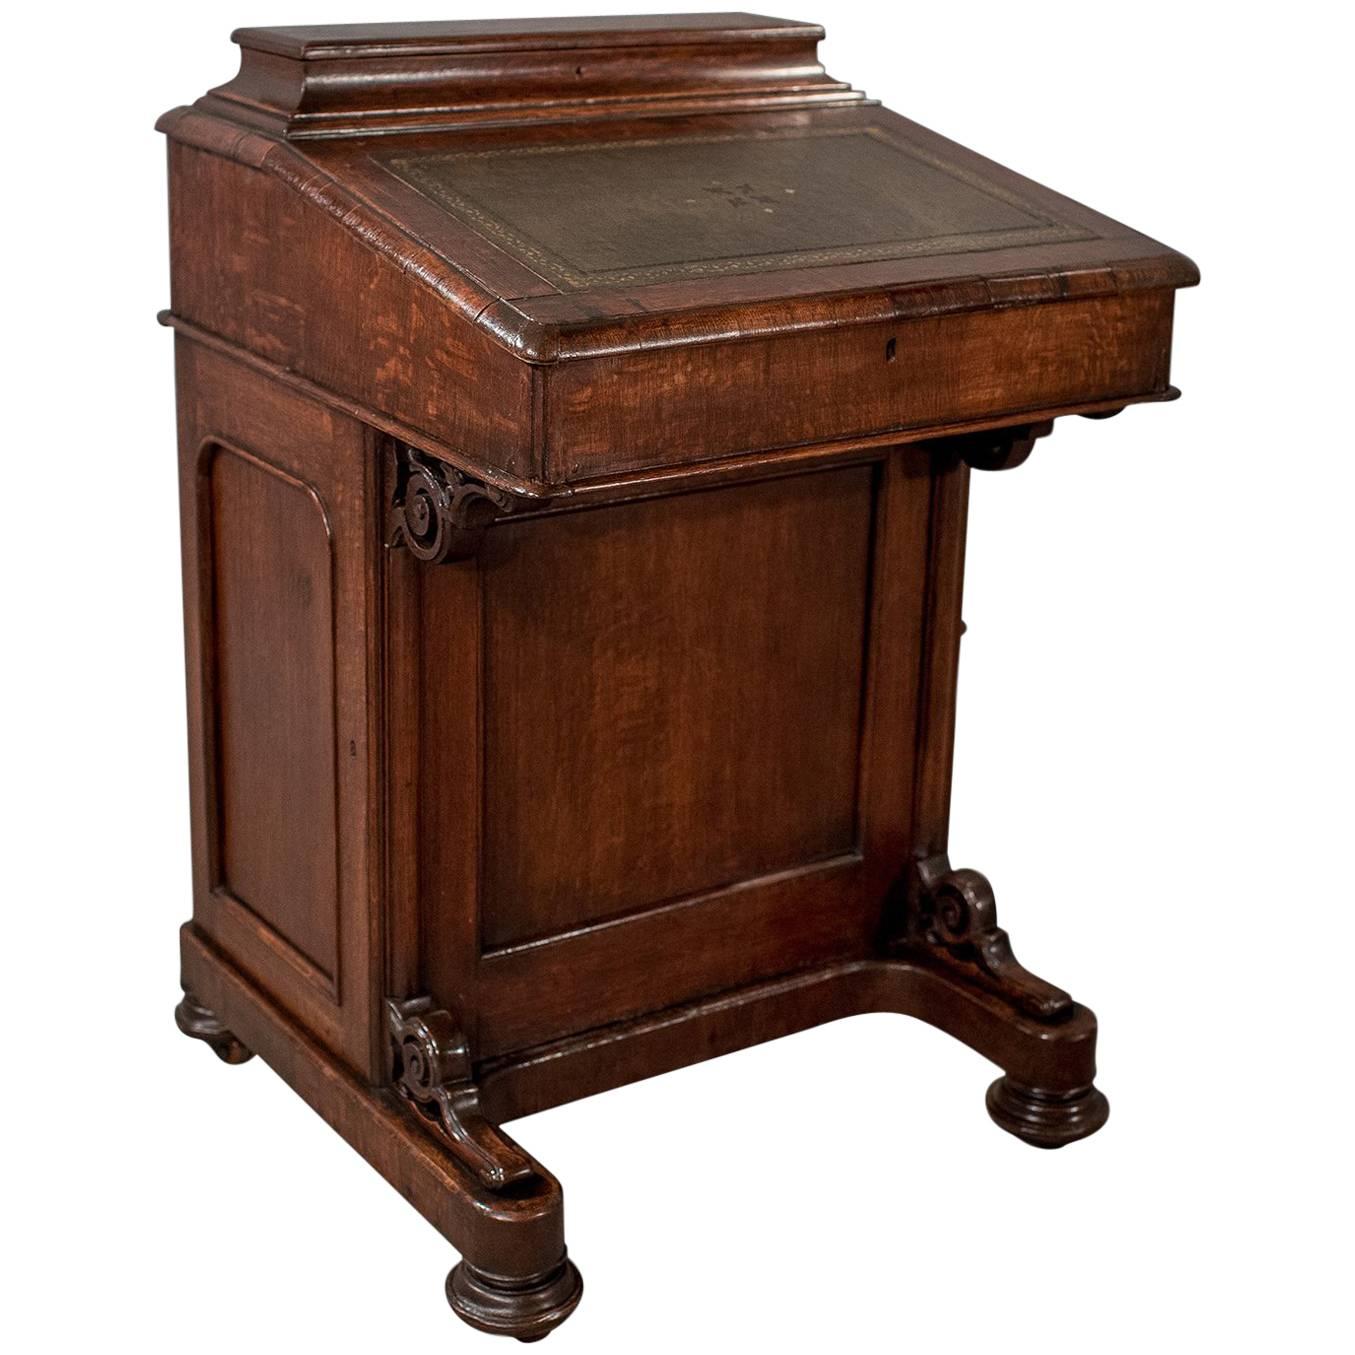 Victorian Antique Davenport, English Oak Writing Desk, Bureau, circa 1870